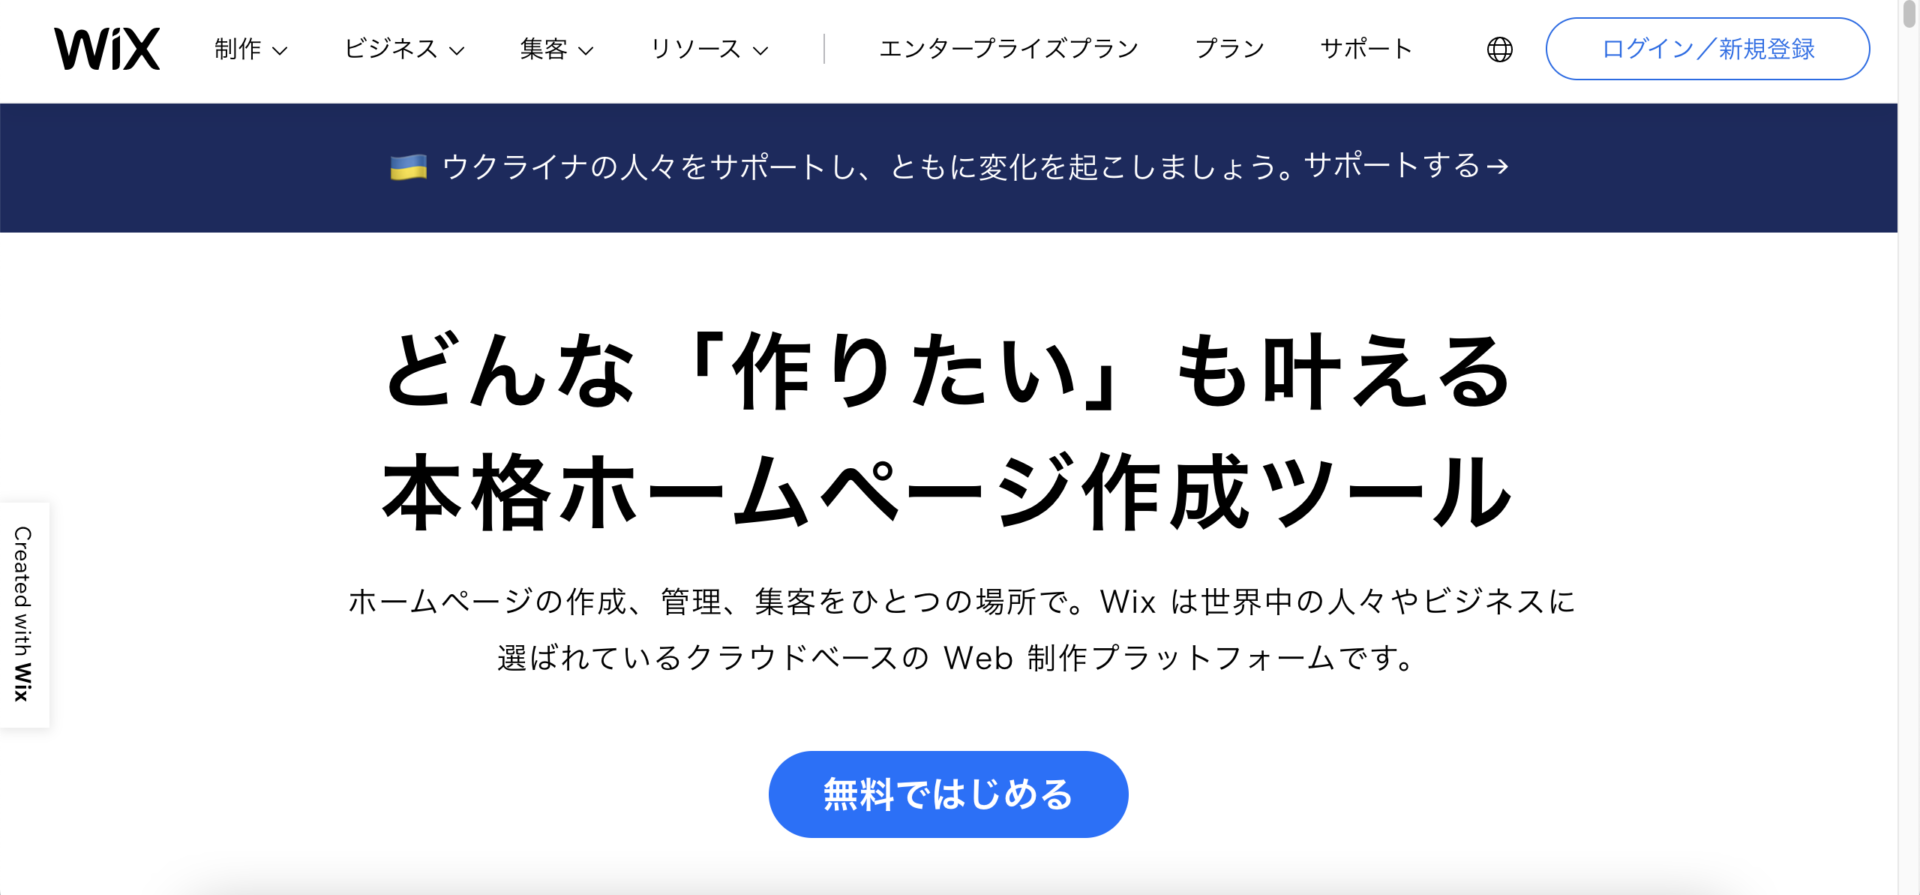 Wix公式サイト